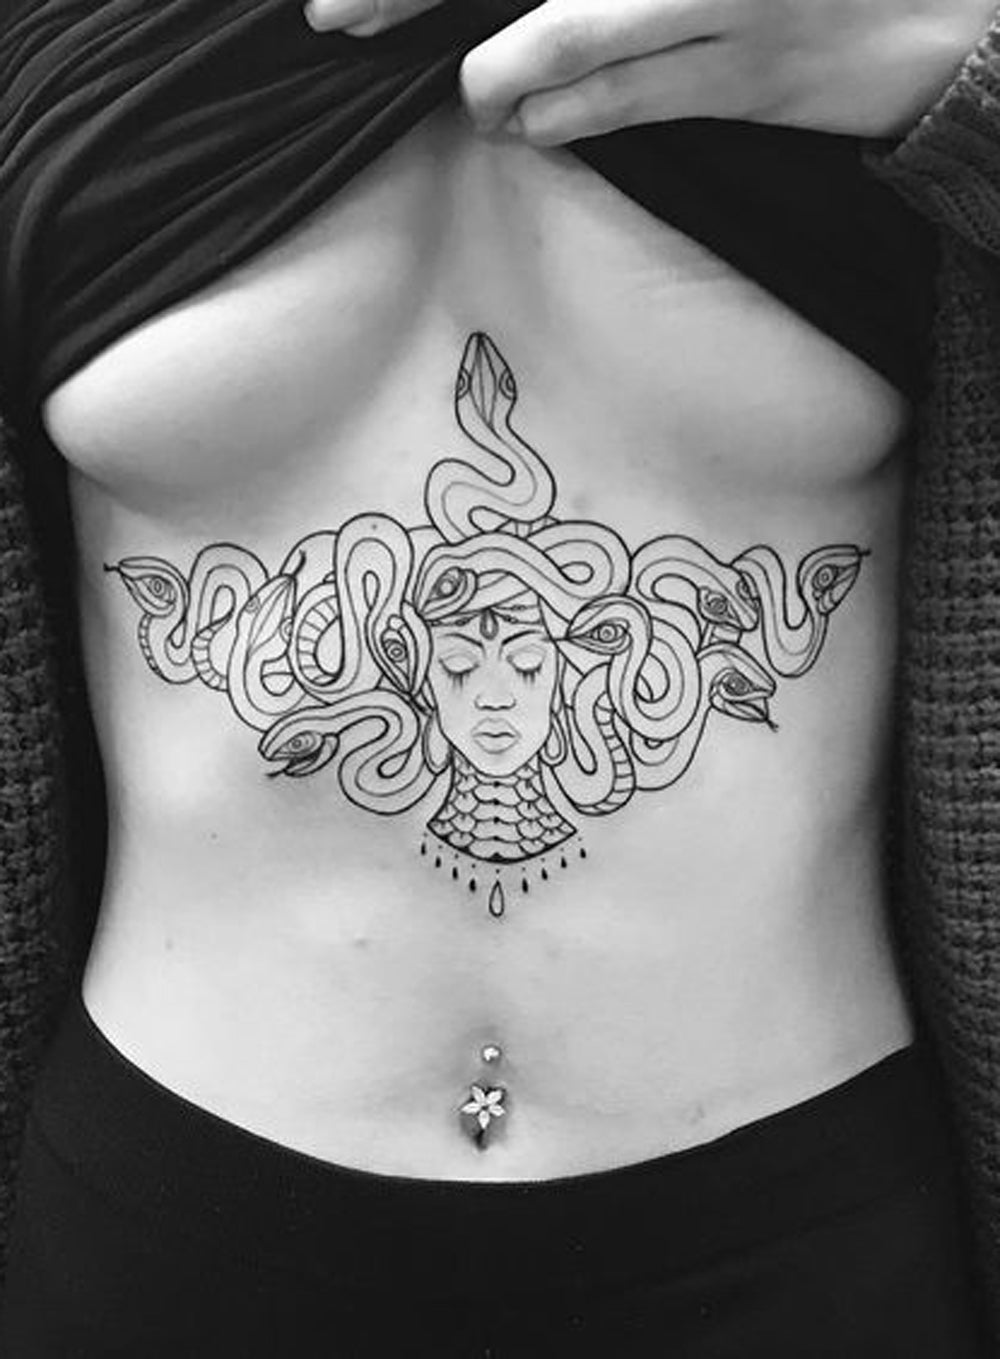 Unique Medusa Snake Underboob Tattoo Ideas for Women - Delicate Outline Mythical Creature Tatt -  Ideas únicas del tatuaje del pecho de la serpiente de Medusa para las mujeres - www.MyBodiArt.com